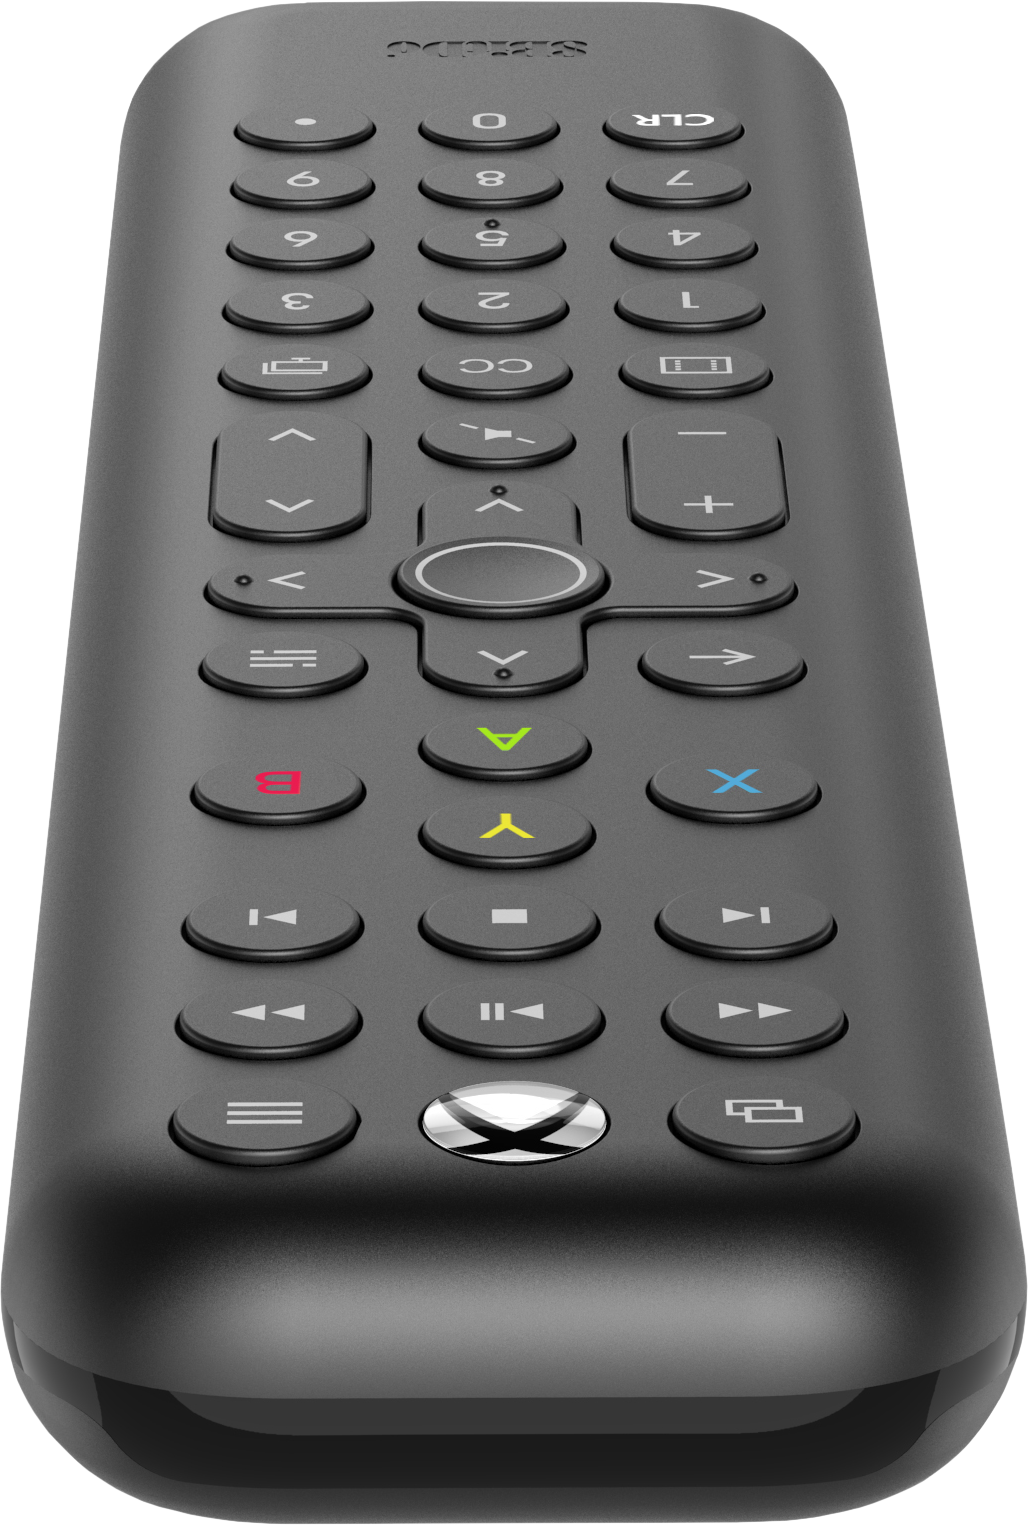 8BitDo Media Remote for Xbox - Long Edition